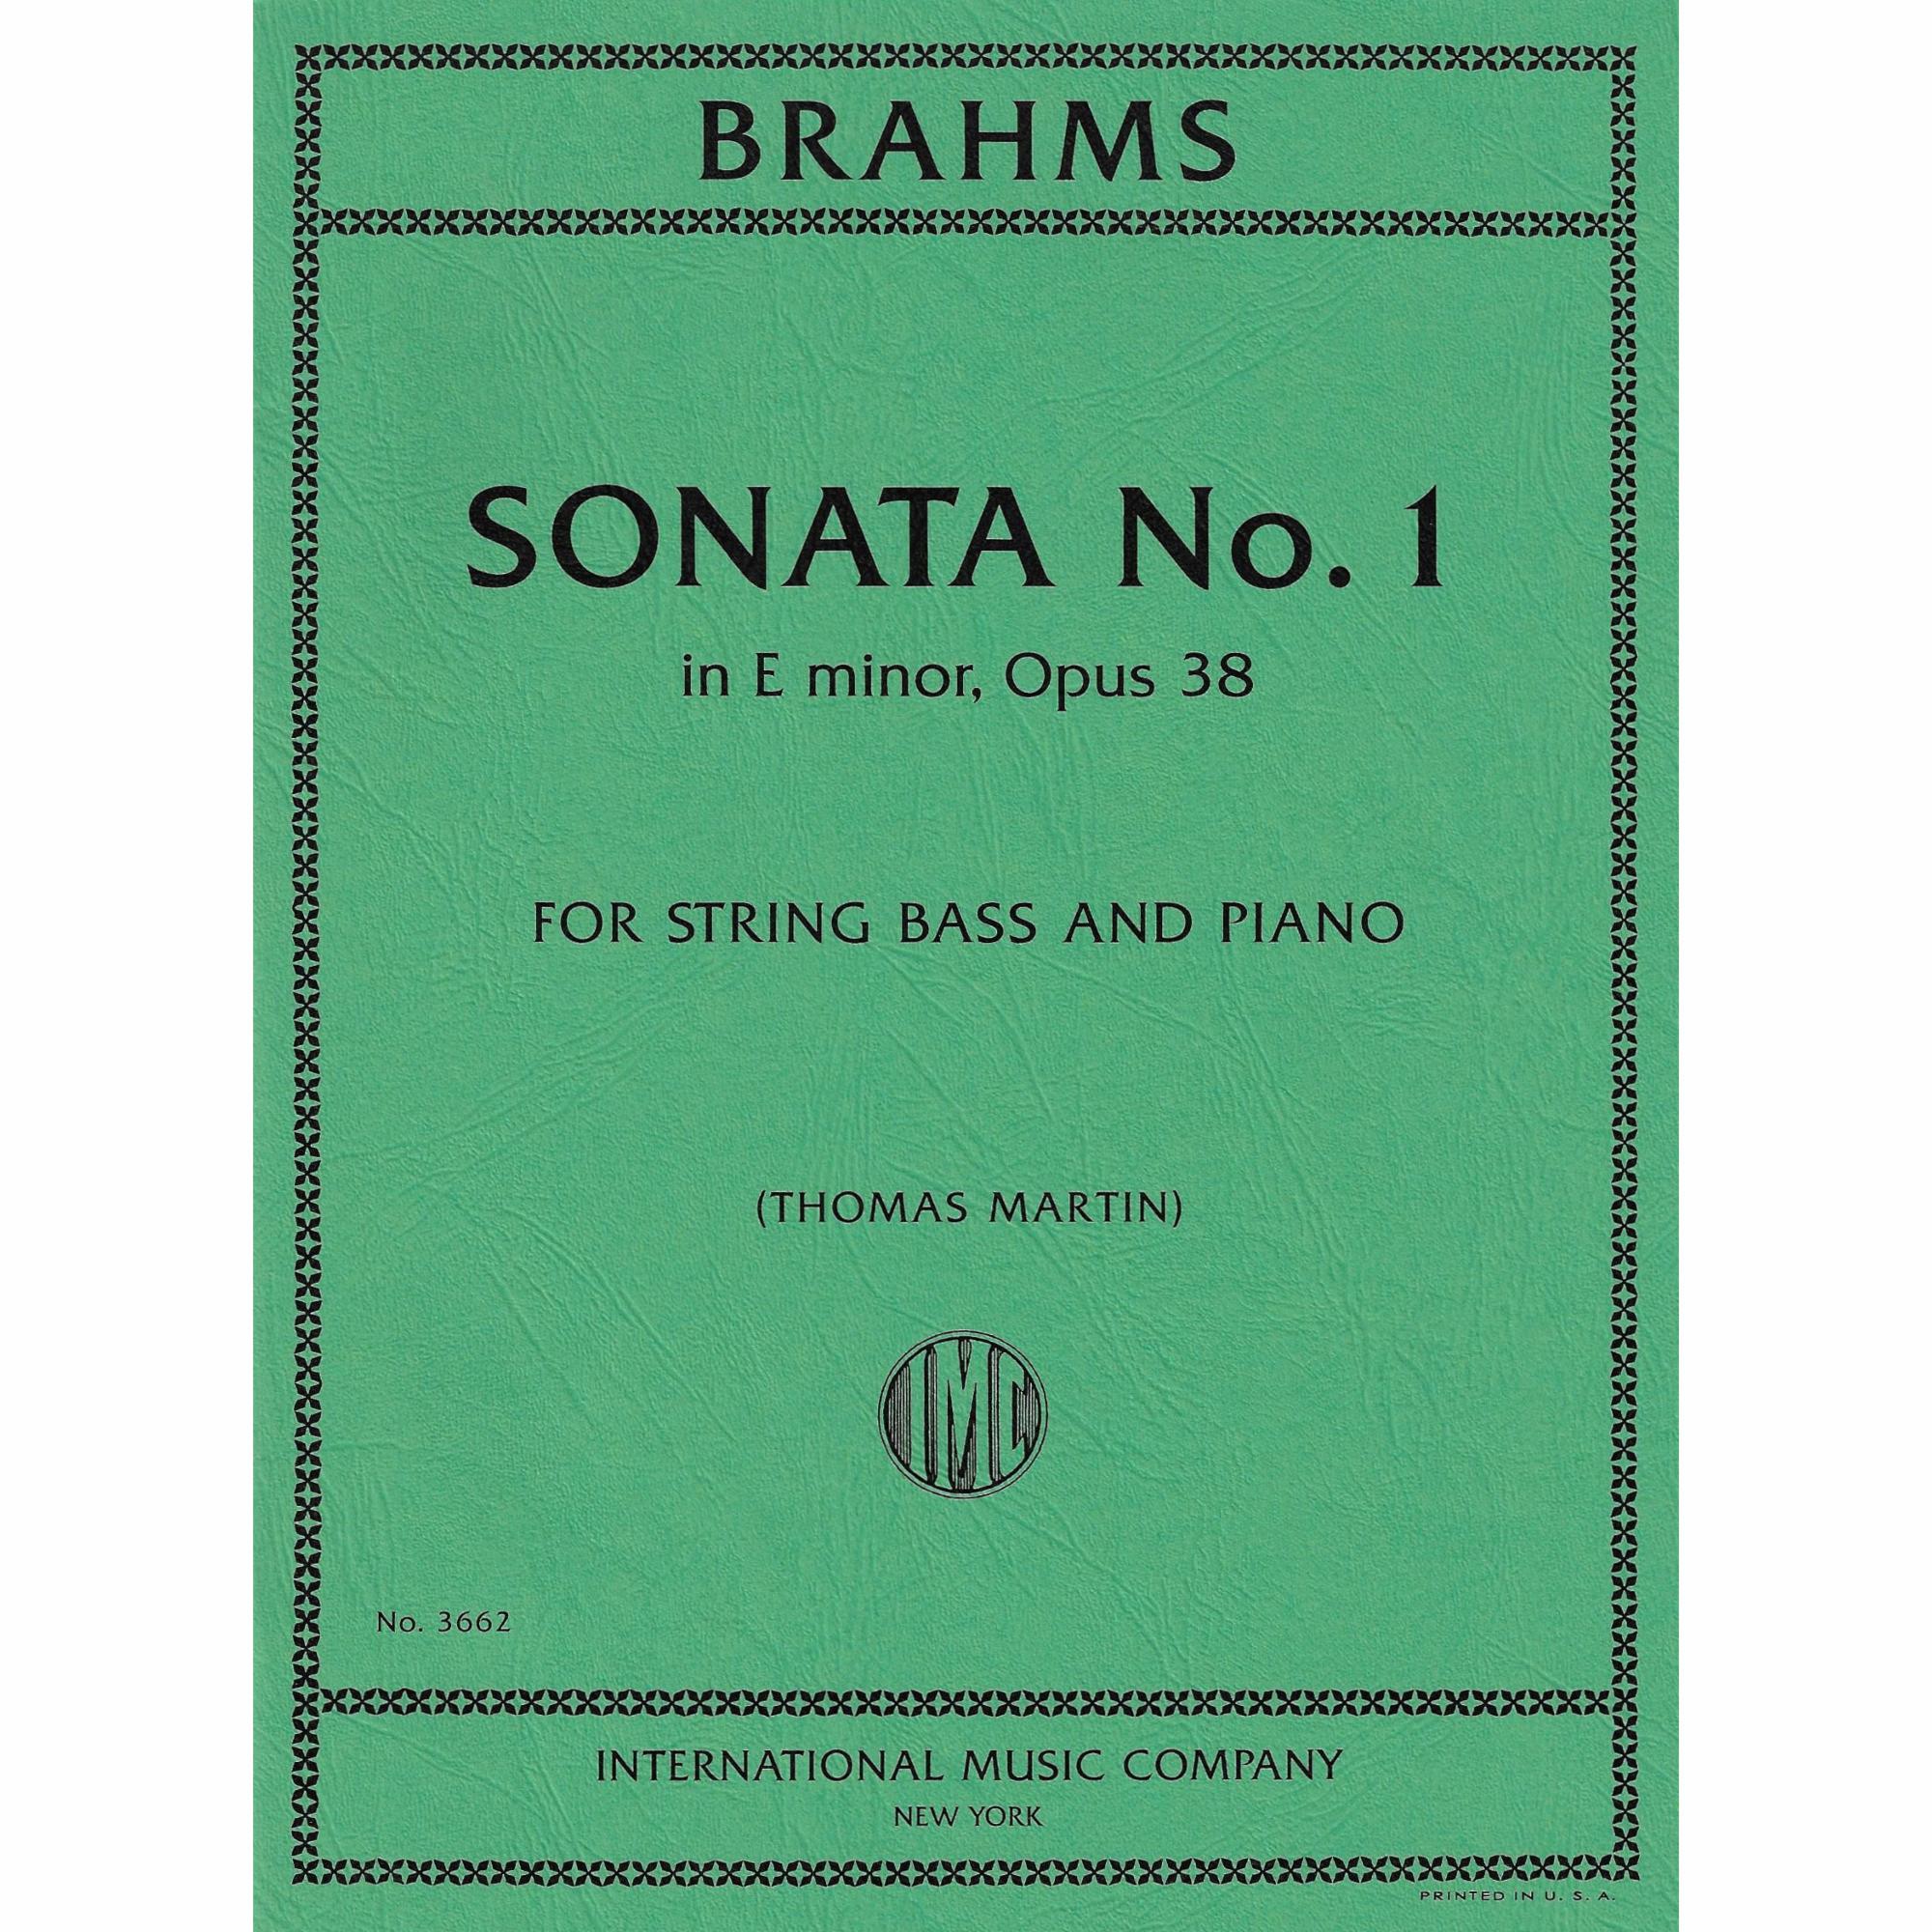 Bass Sonata in E Minor, Op. 38